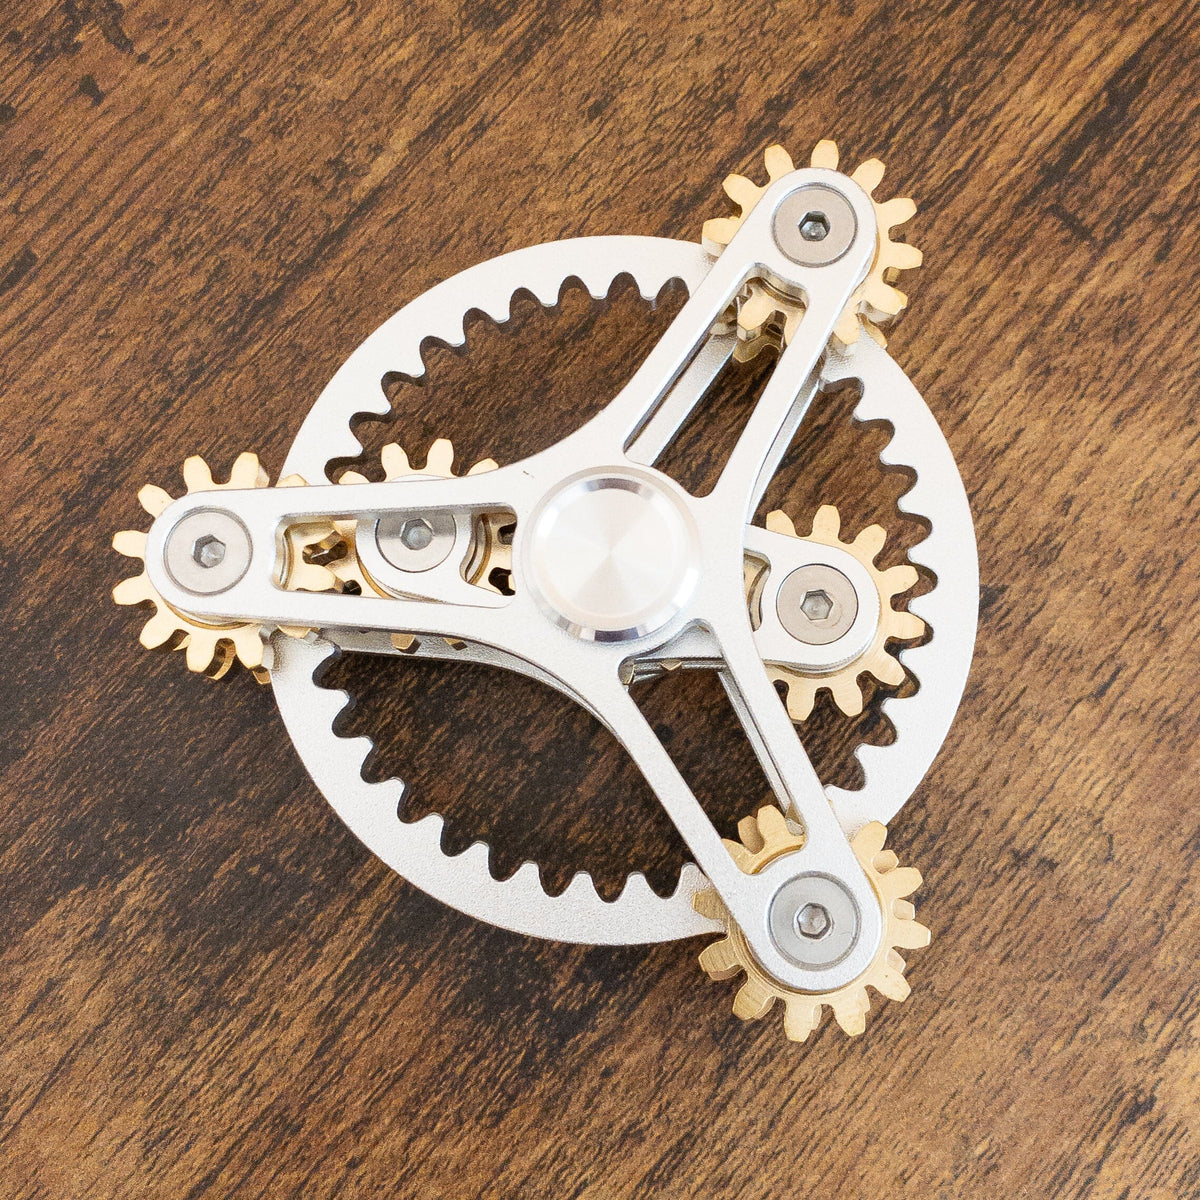 Ultimate Gear Fidget Spinner – The Autistic Innovator